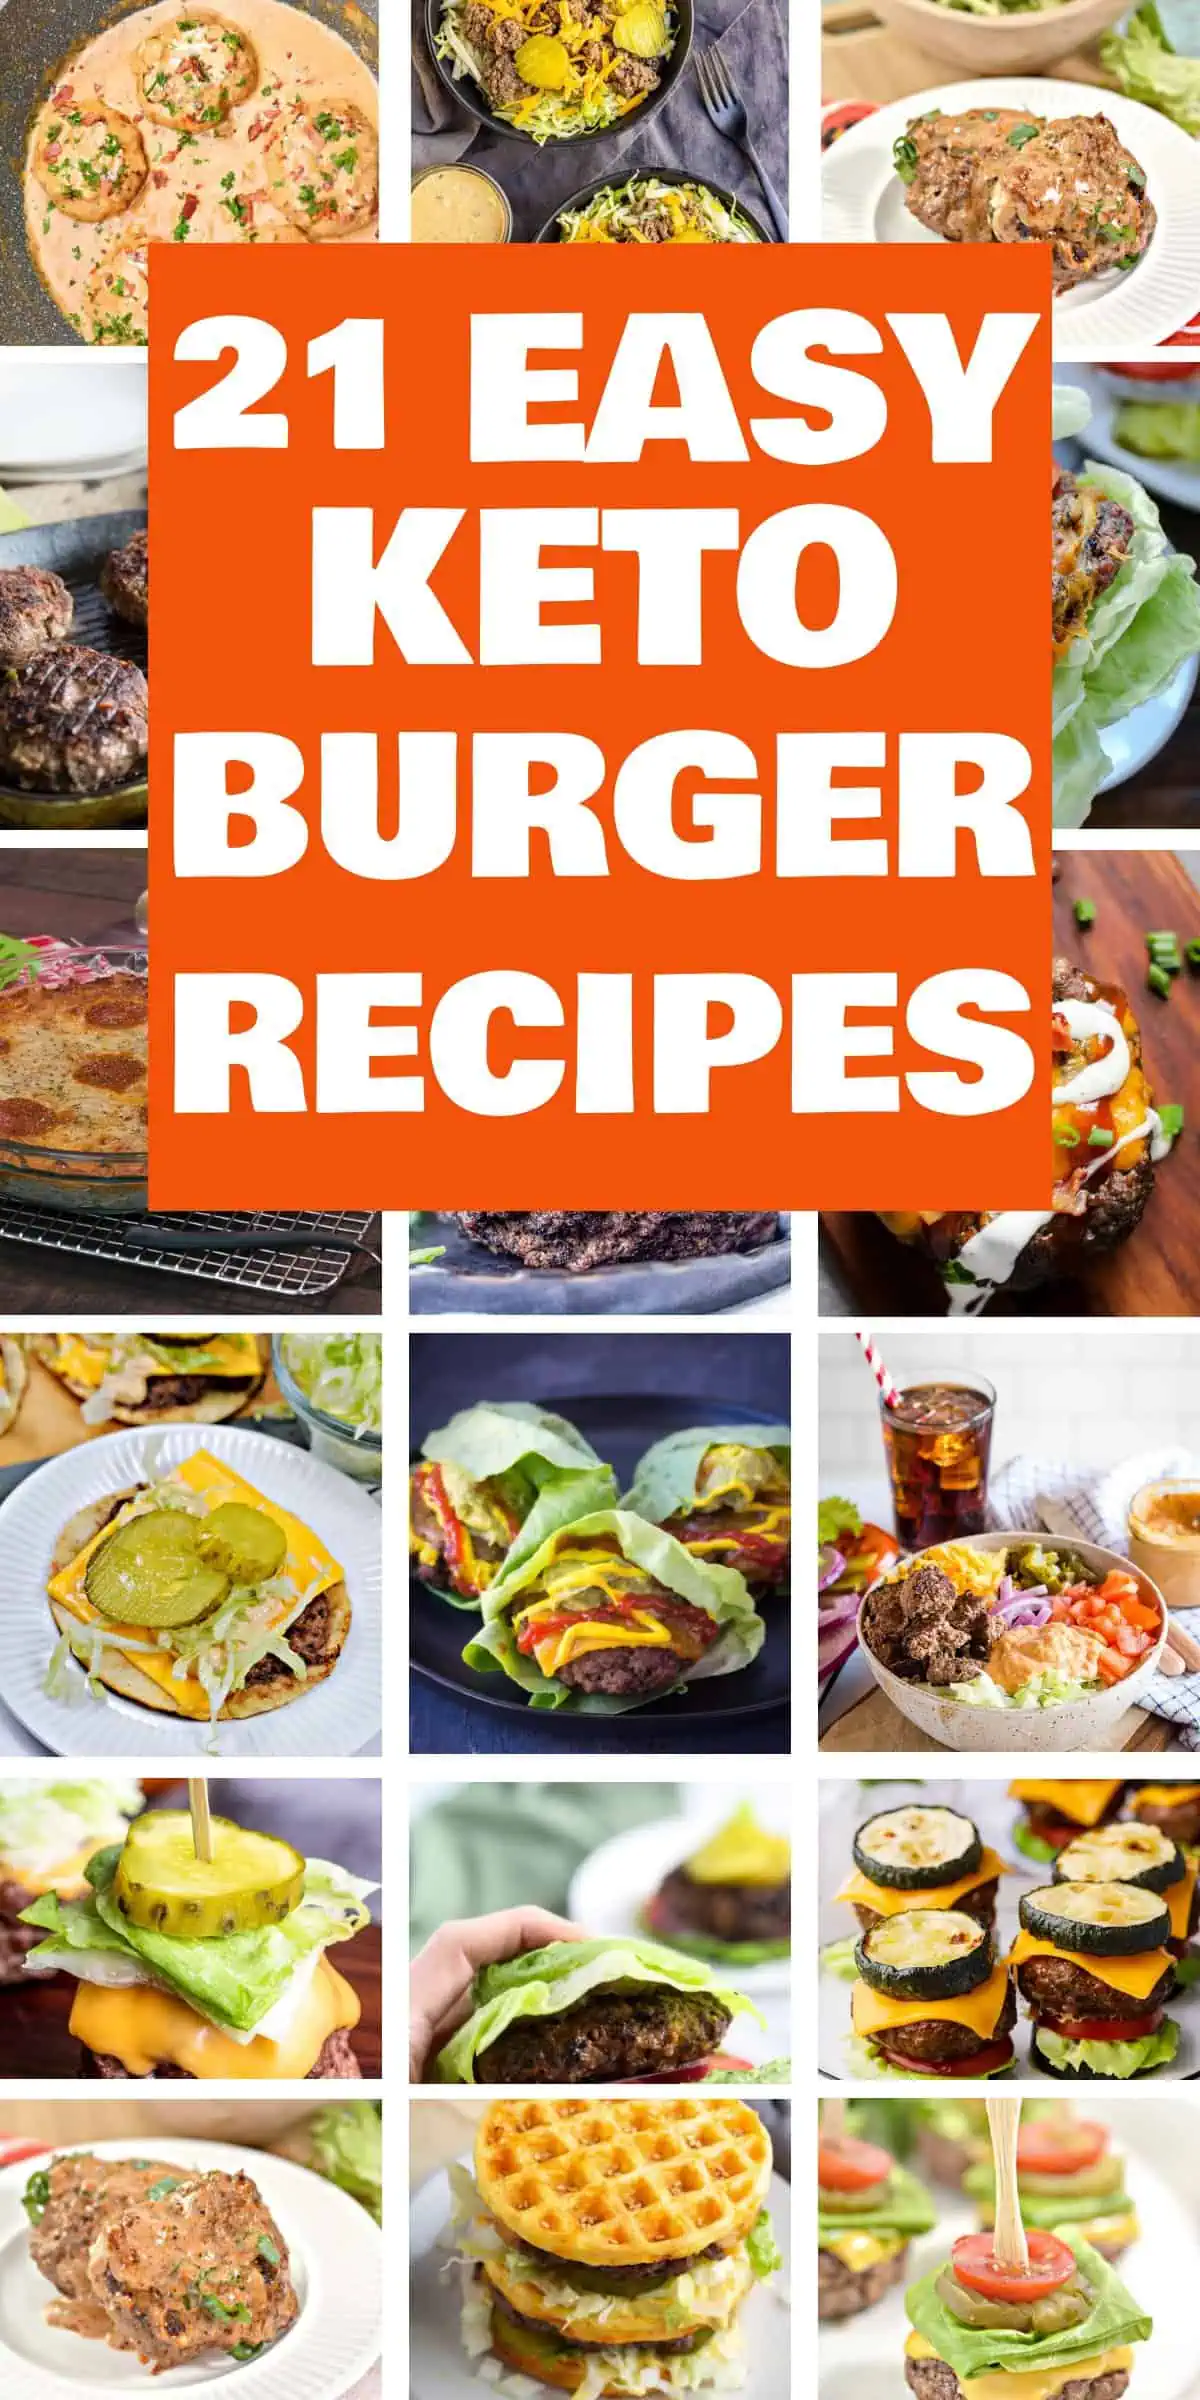 21 Easy Keto Burger Recipes